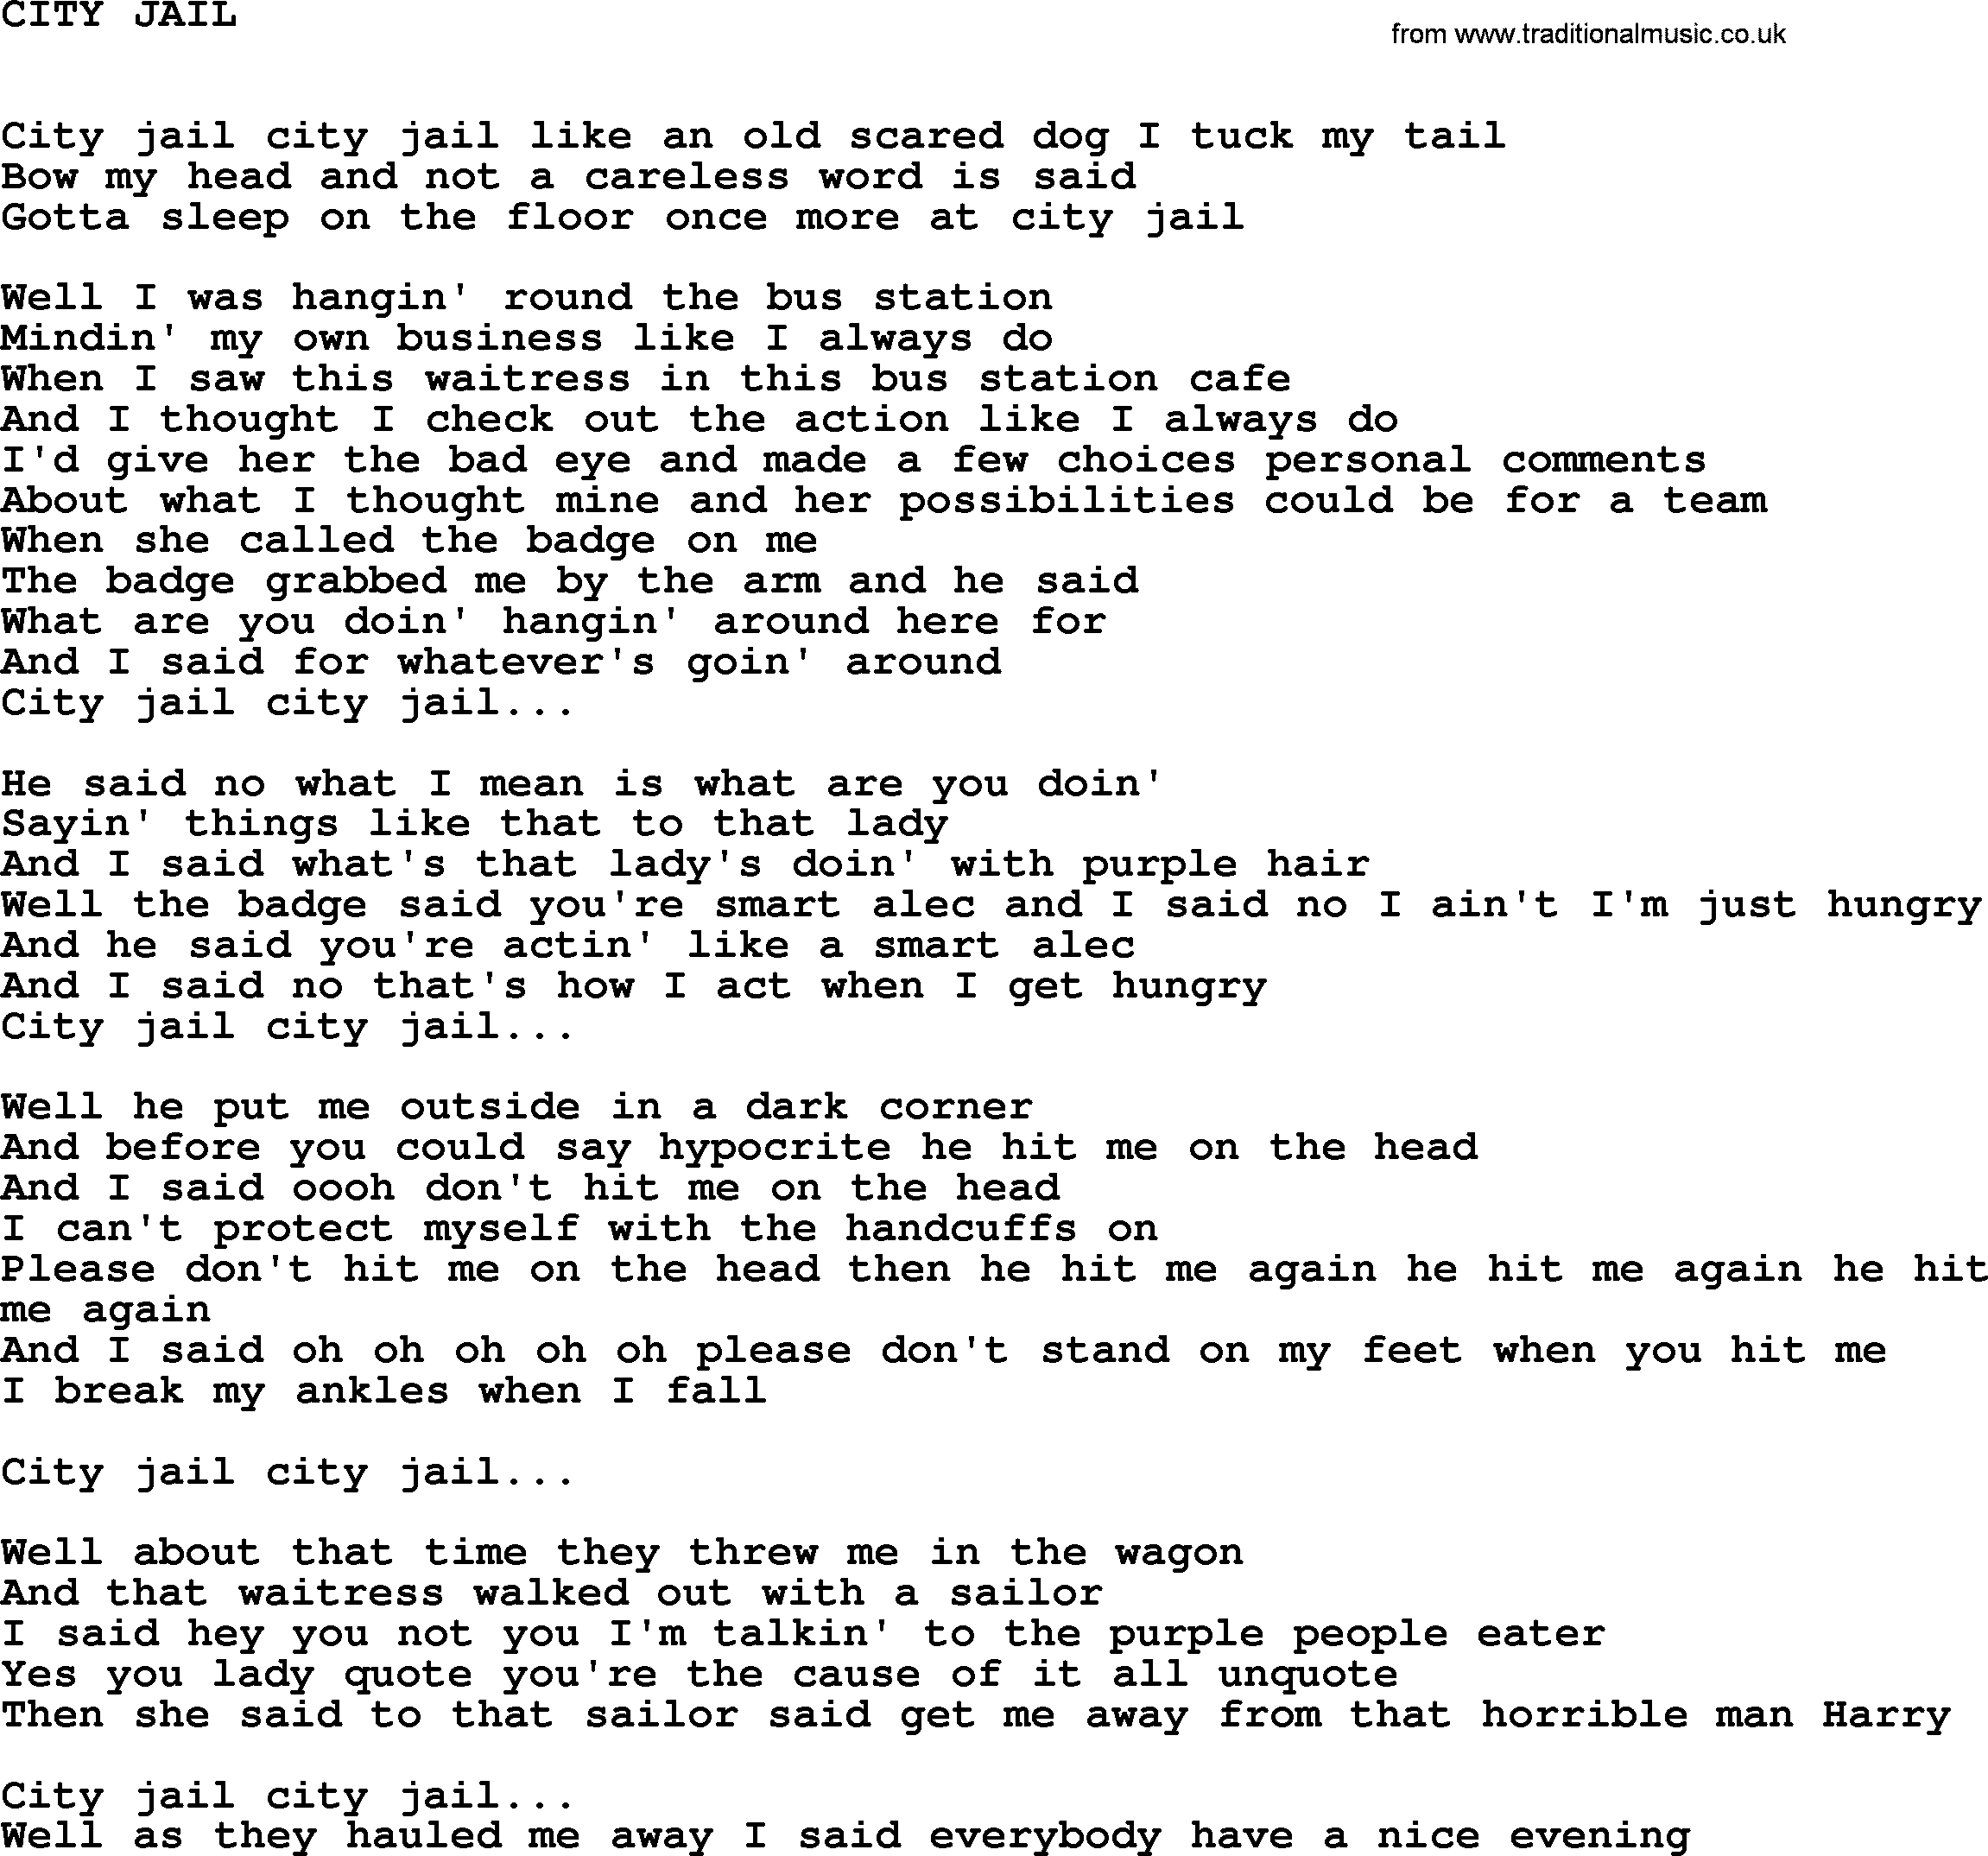 Johnny Cash song City Jail.txt lyrics